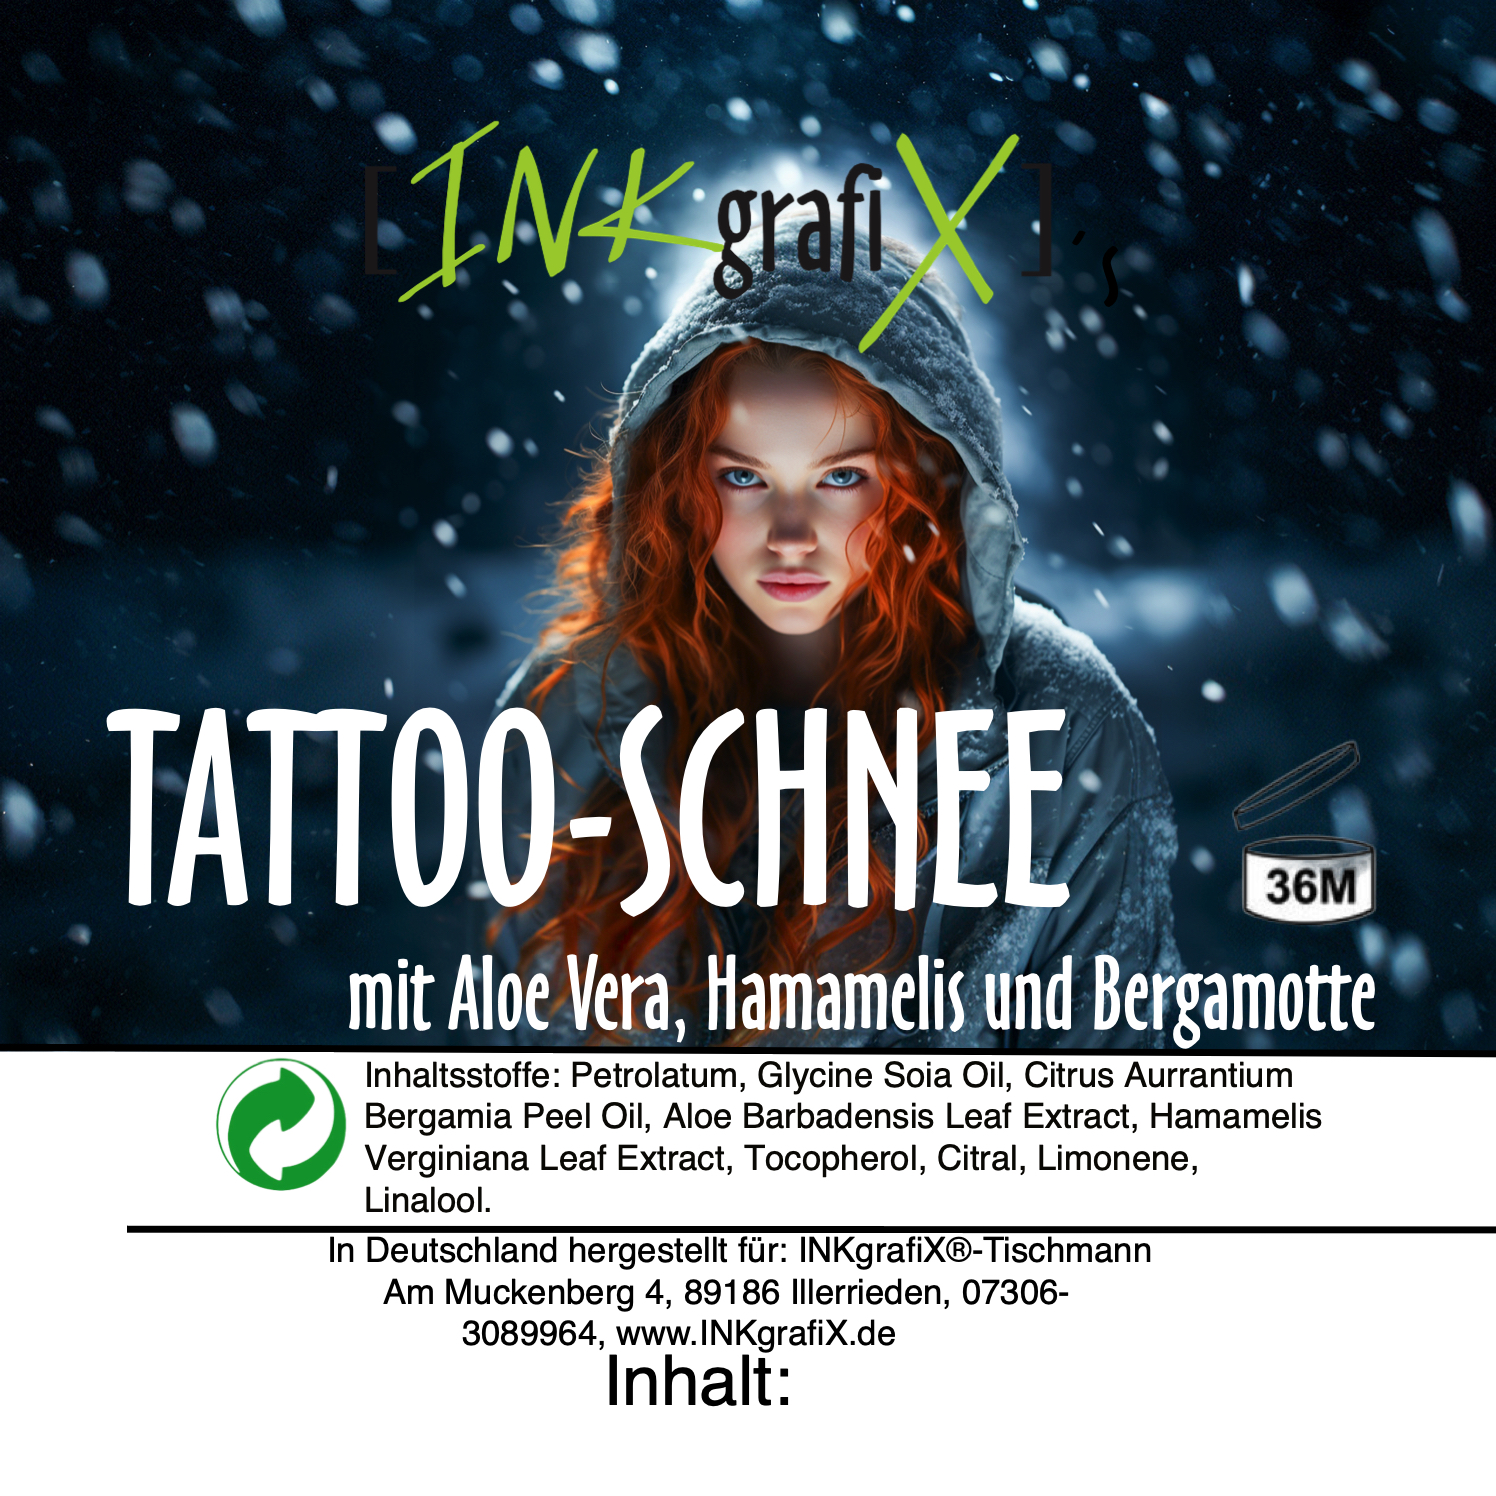 tattooschnee-300923